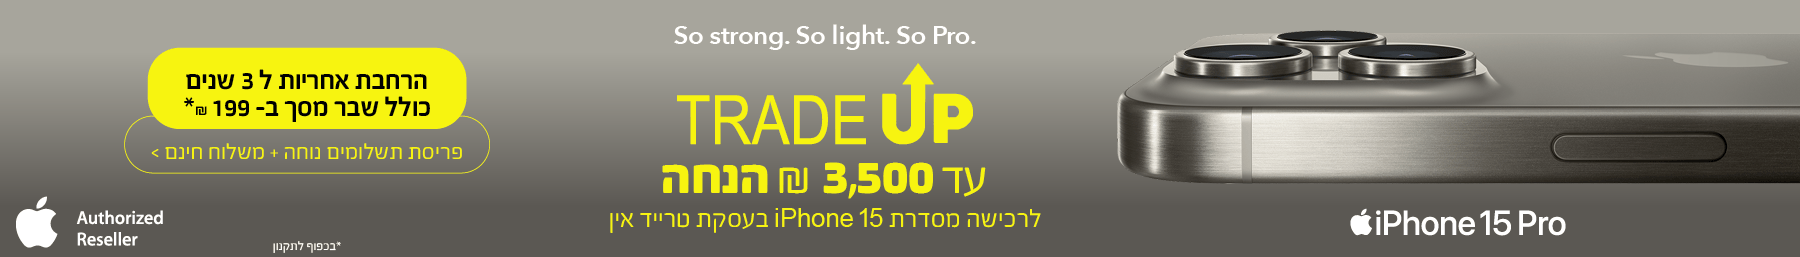 So strong. So light. So Pro TradeUp עד 3500 ש"ח הנחה לרכישה מסדרת iPhone 15 בעסקת טרייד אין הרחבת אחריות ל-3 שנים כולל שבר מסך ב199 ש"ח* פריסת תשלומים נוחה + משלוח חינם *בכפוף לתקנון